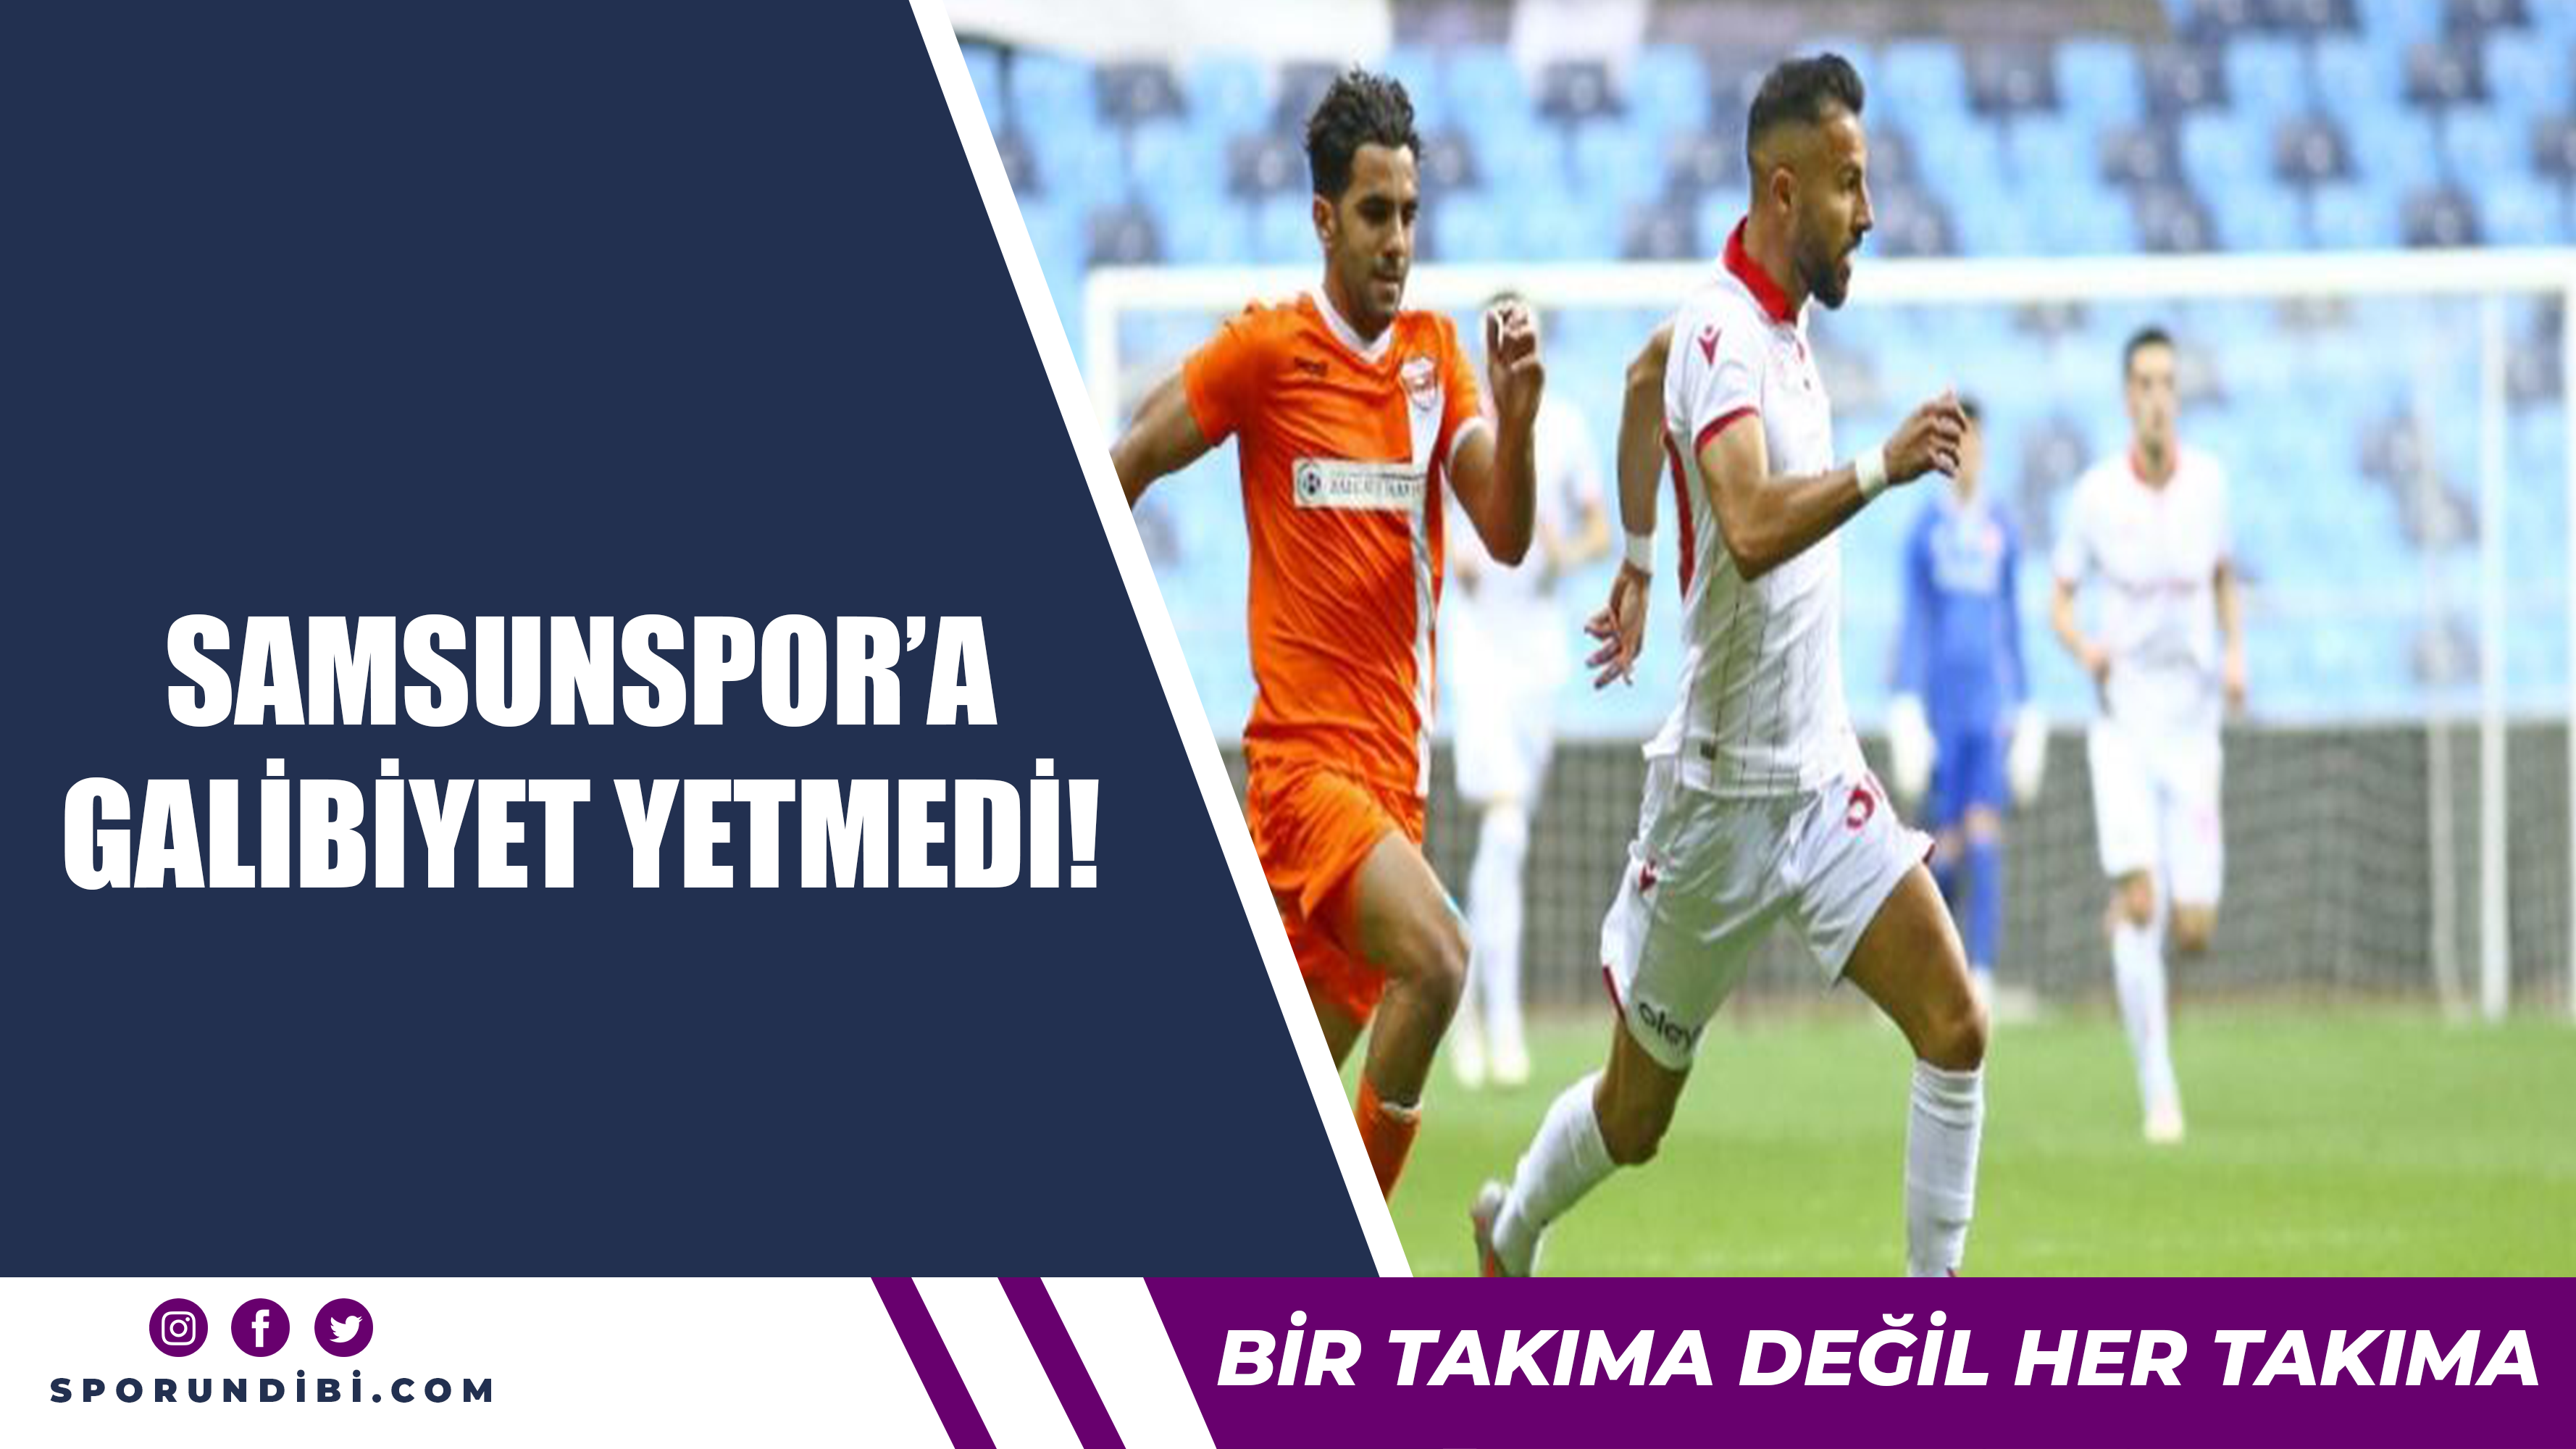 Samsunspor'a galibiyet yetmedi!